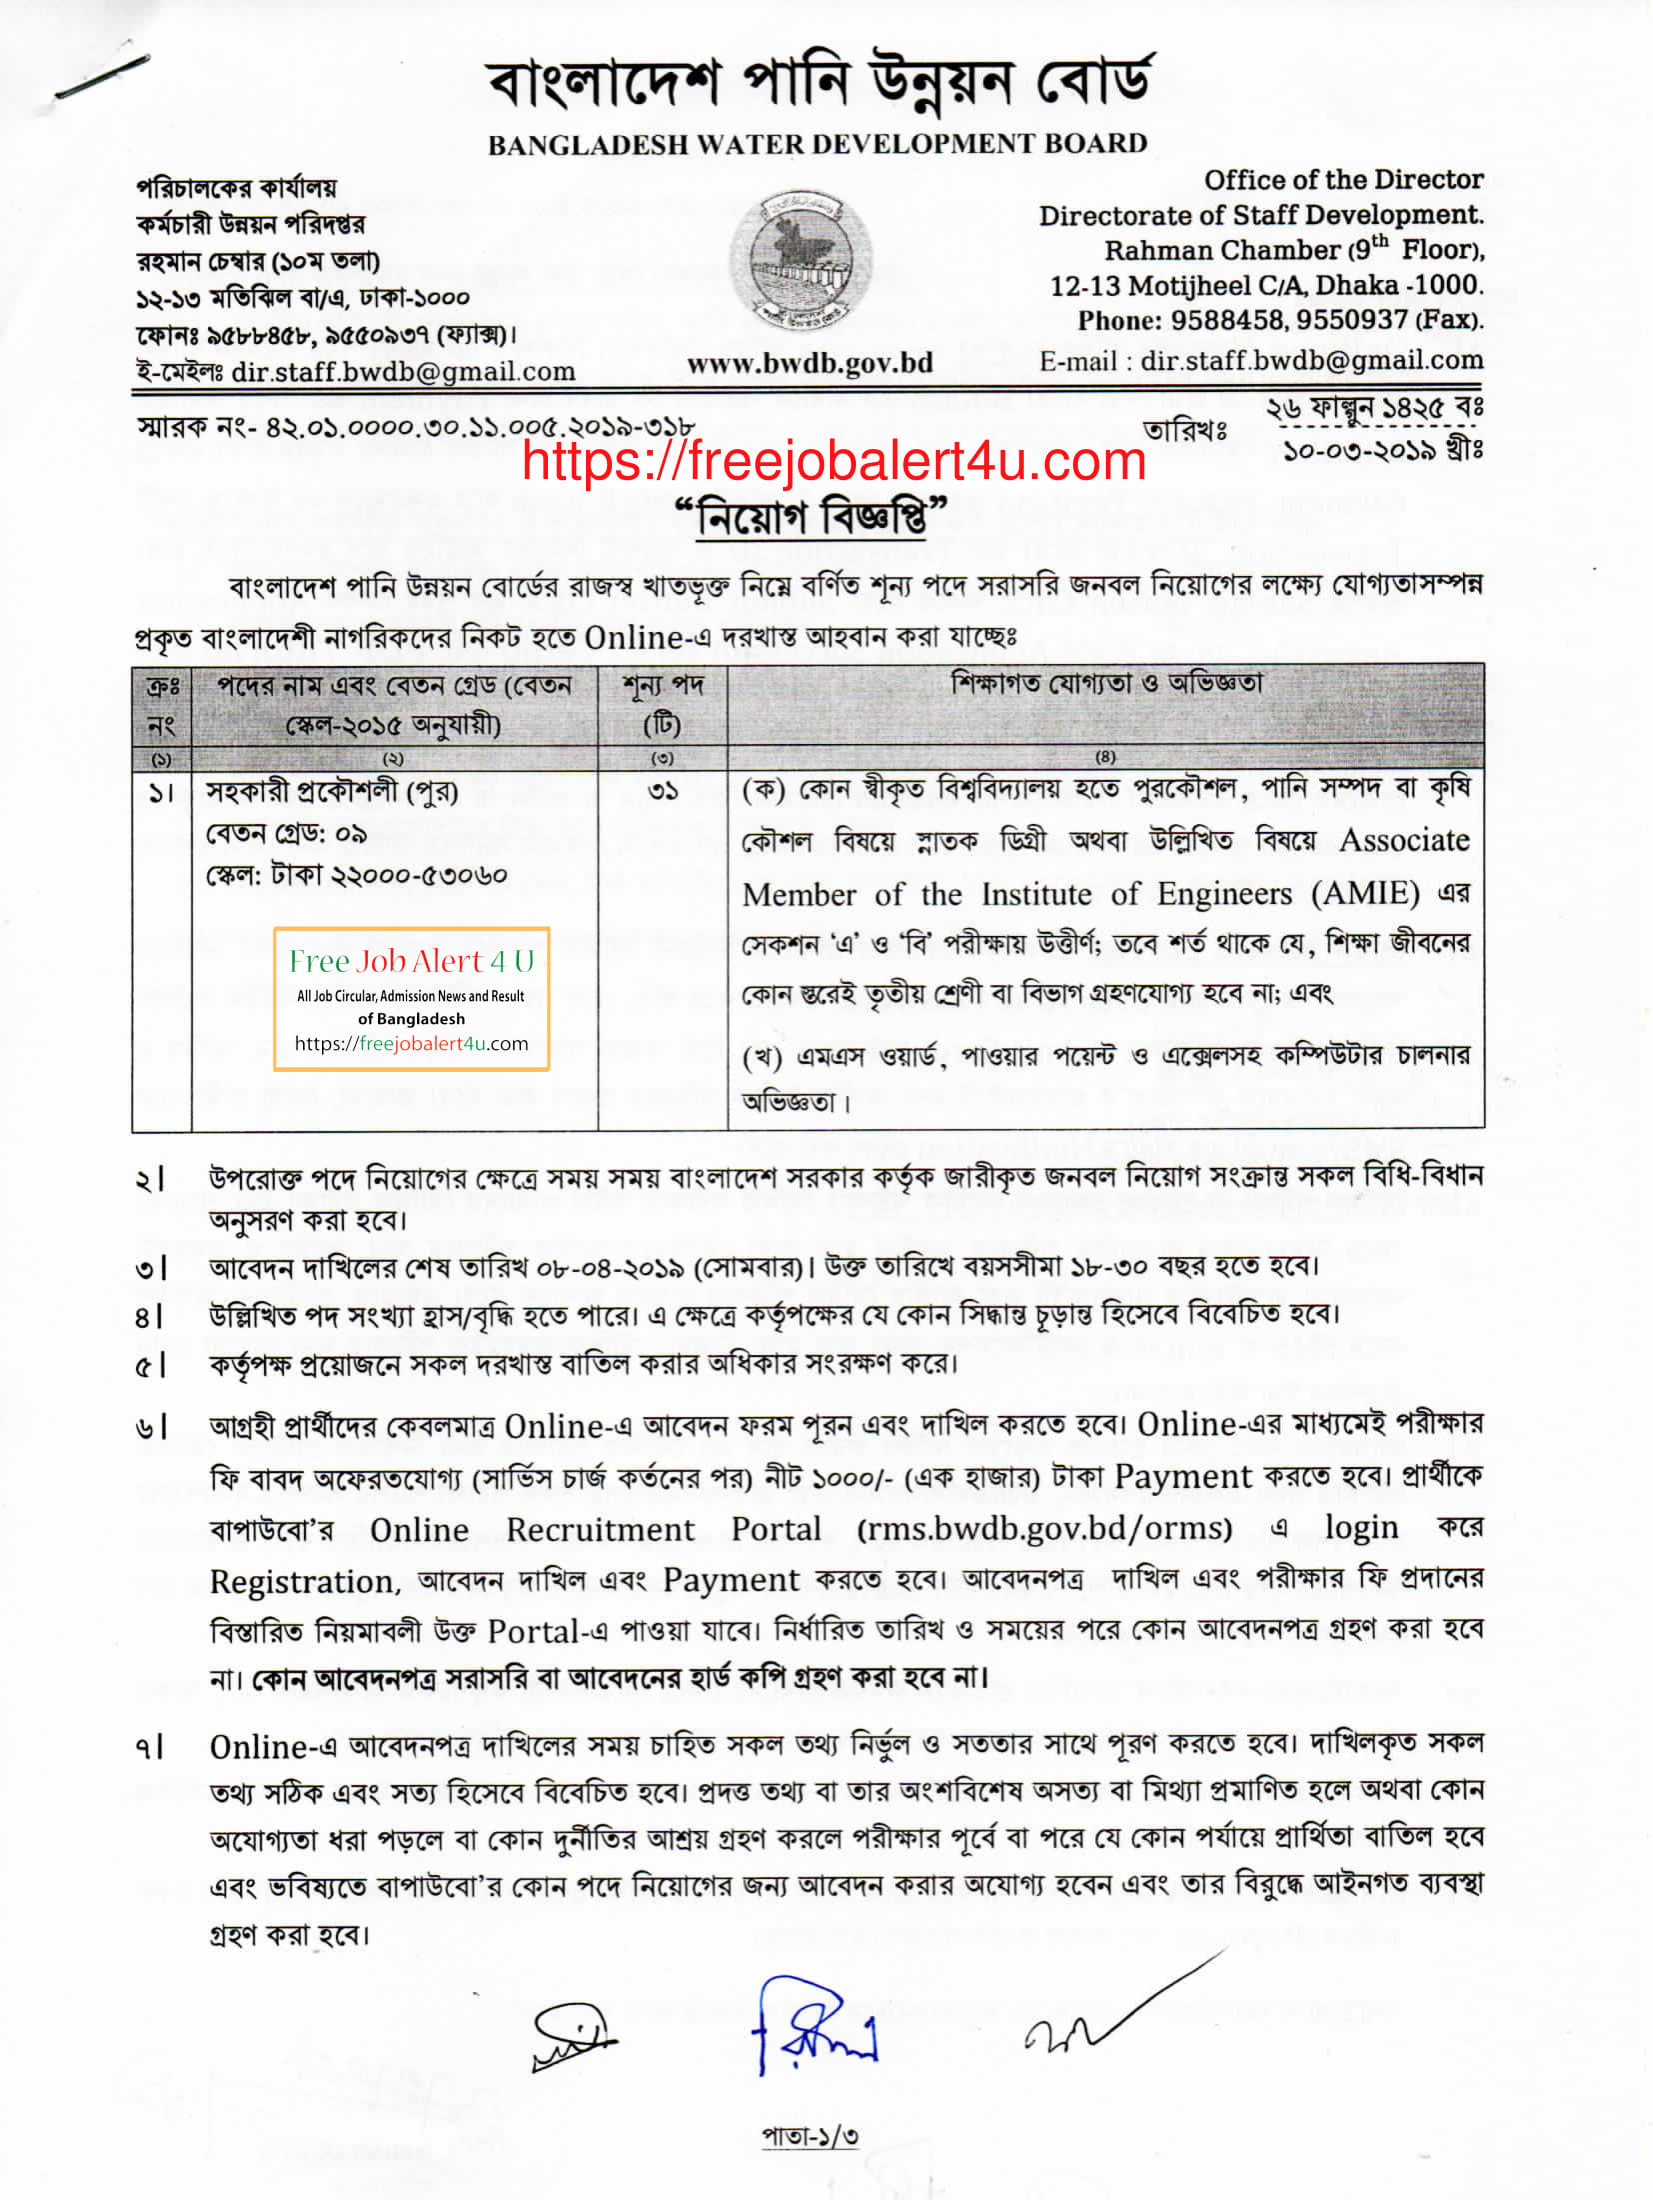 bangladesh water development board job circular 2019